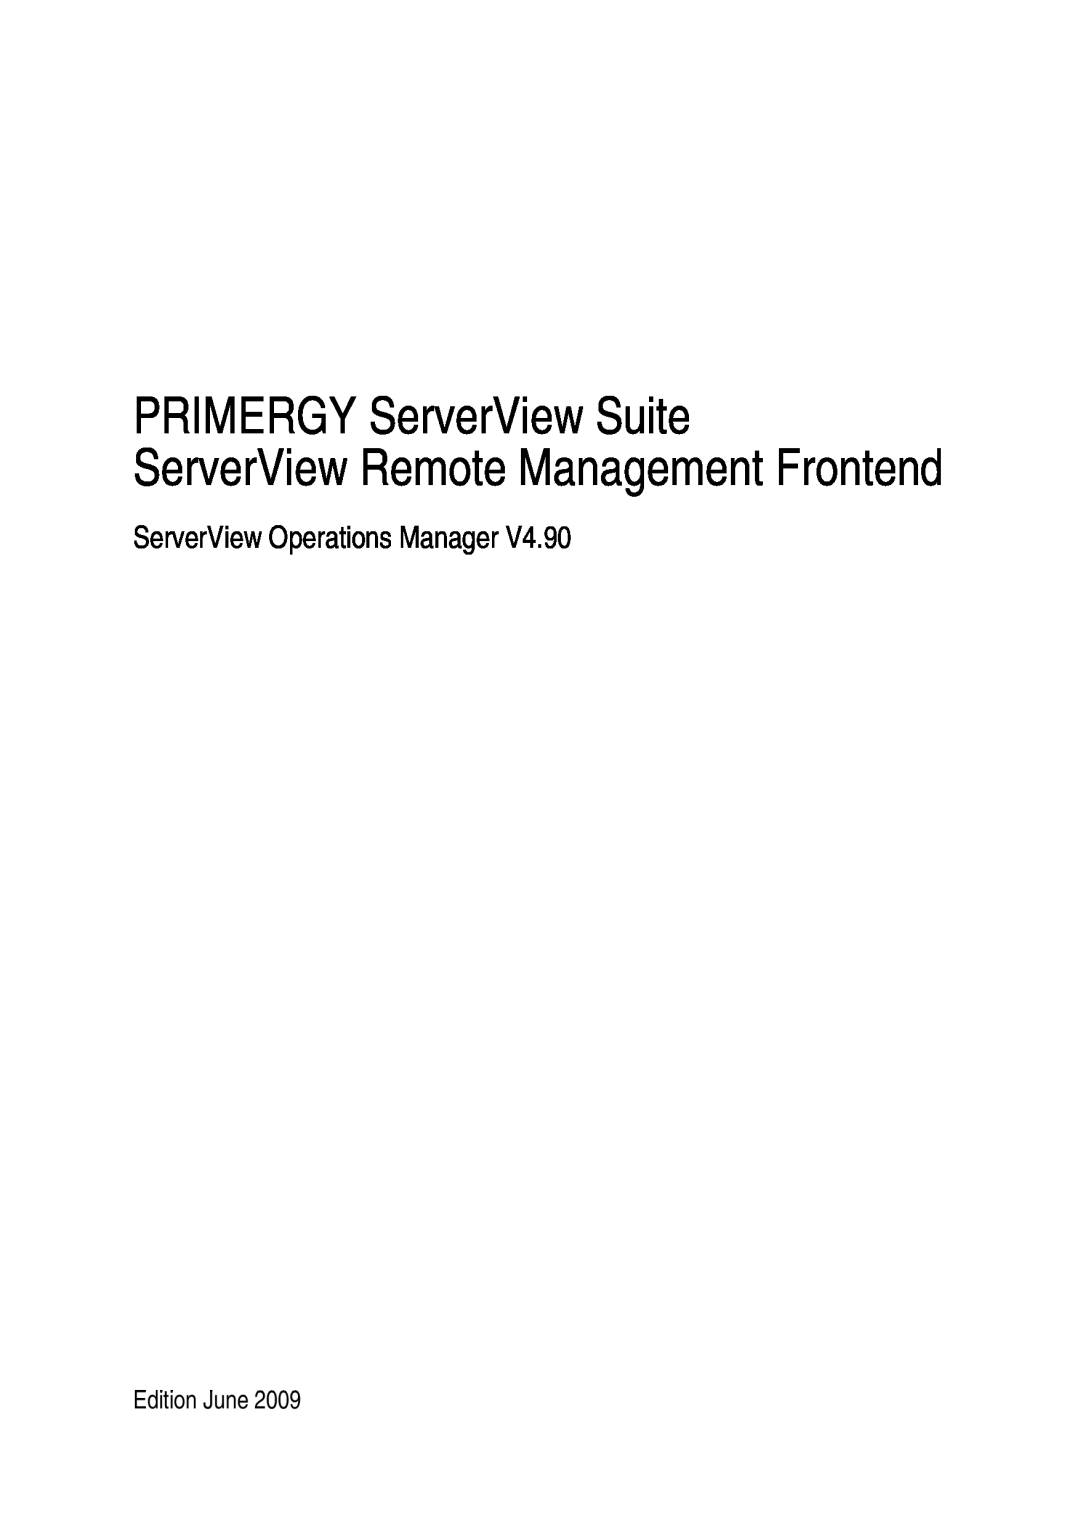 Fujitsu V4.90 manual PRIMERGY ServerView Suite, ServerView Remote Management Frontend, ServerView Operations Manager 